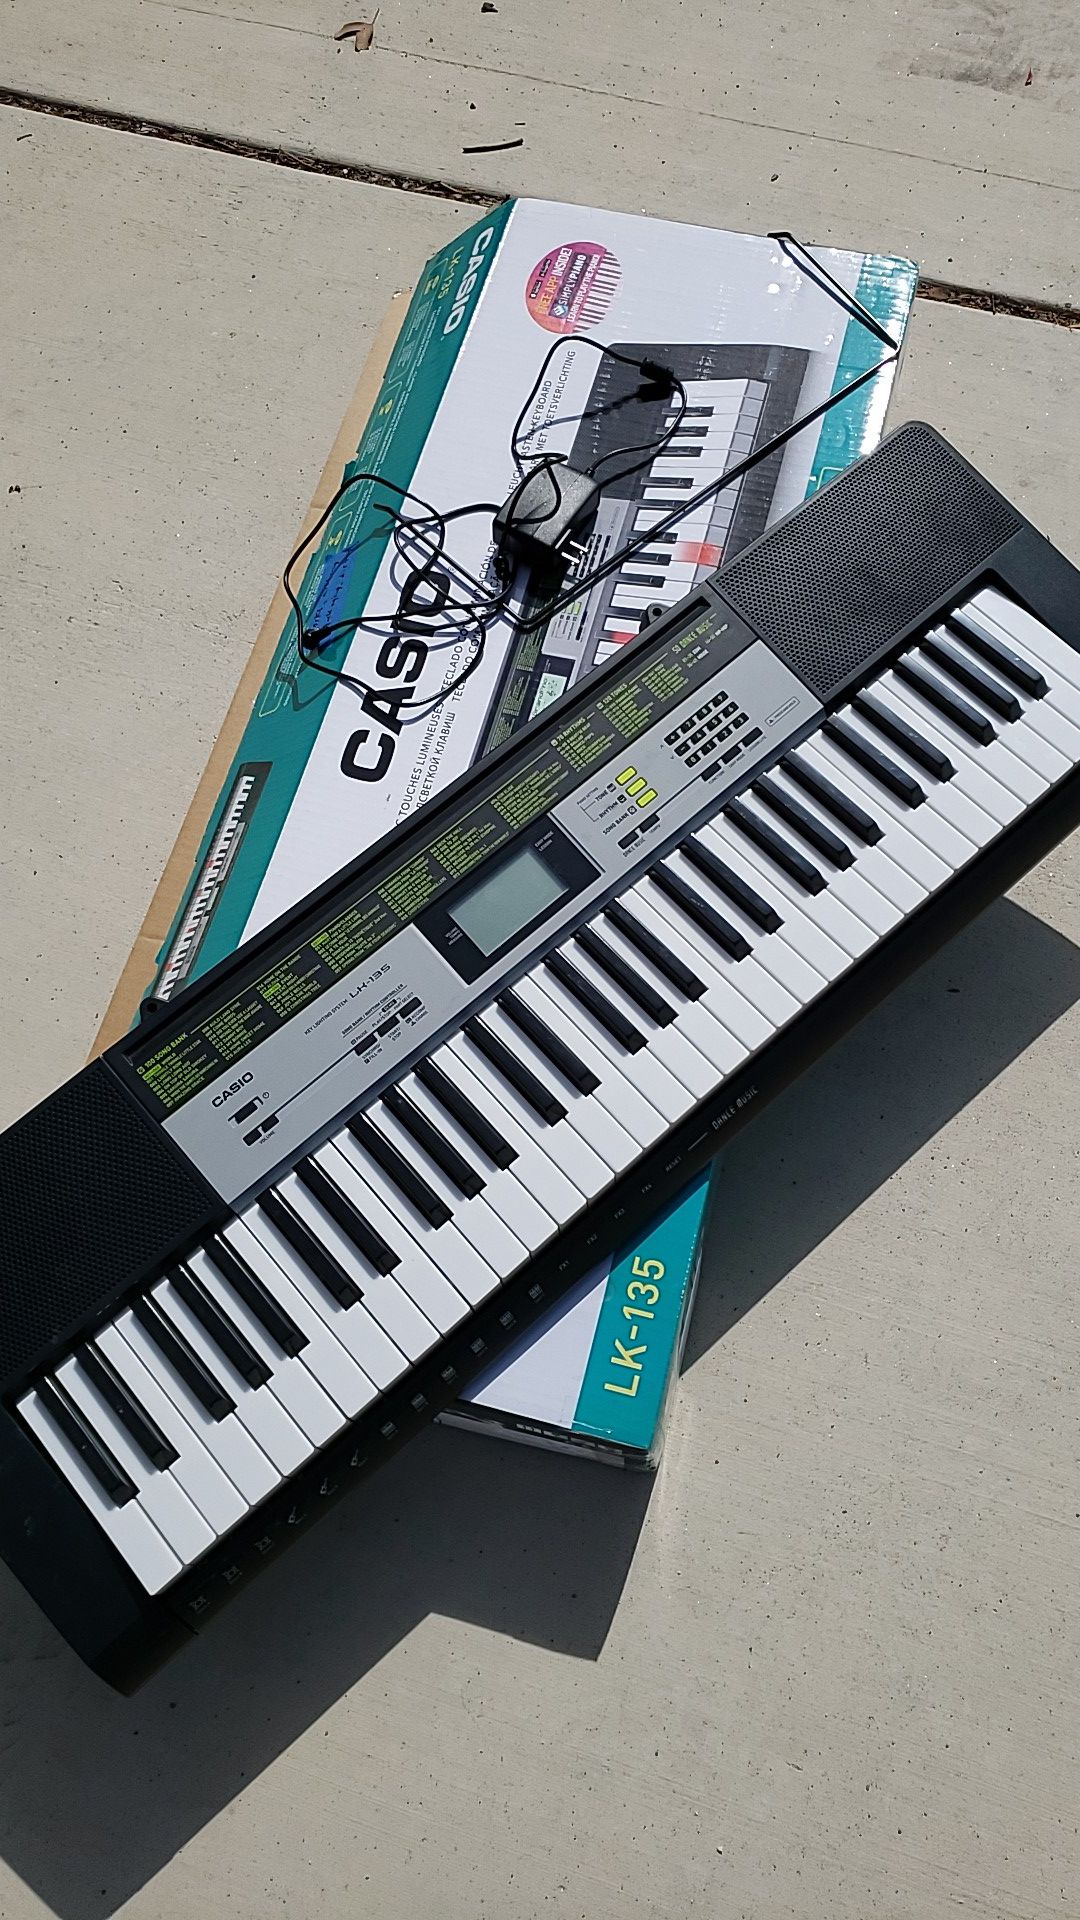 Casio Key Lighting Keyboard Piano 61 Keys LK-135 with Stand